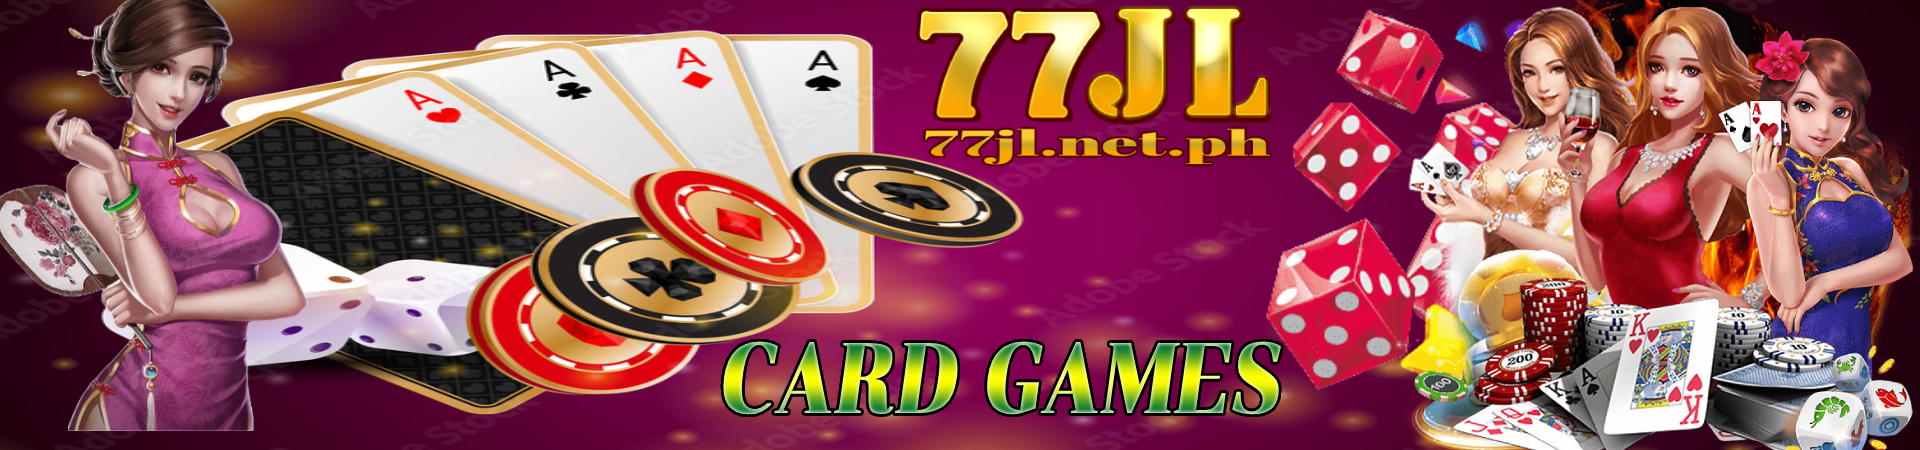 card games 77jl banner 88